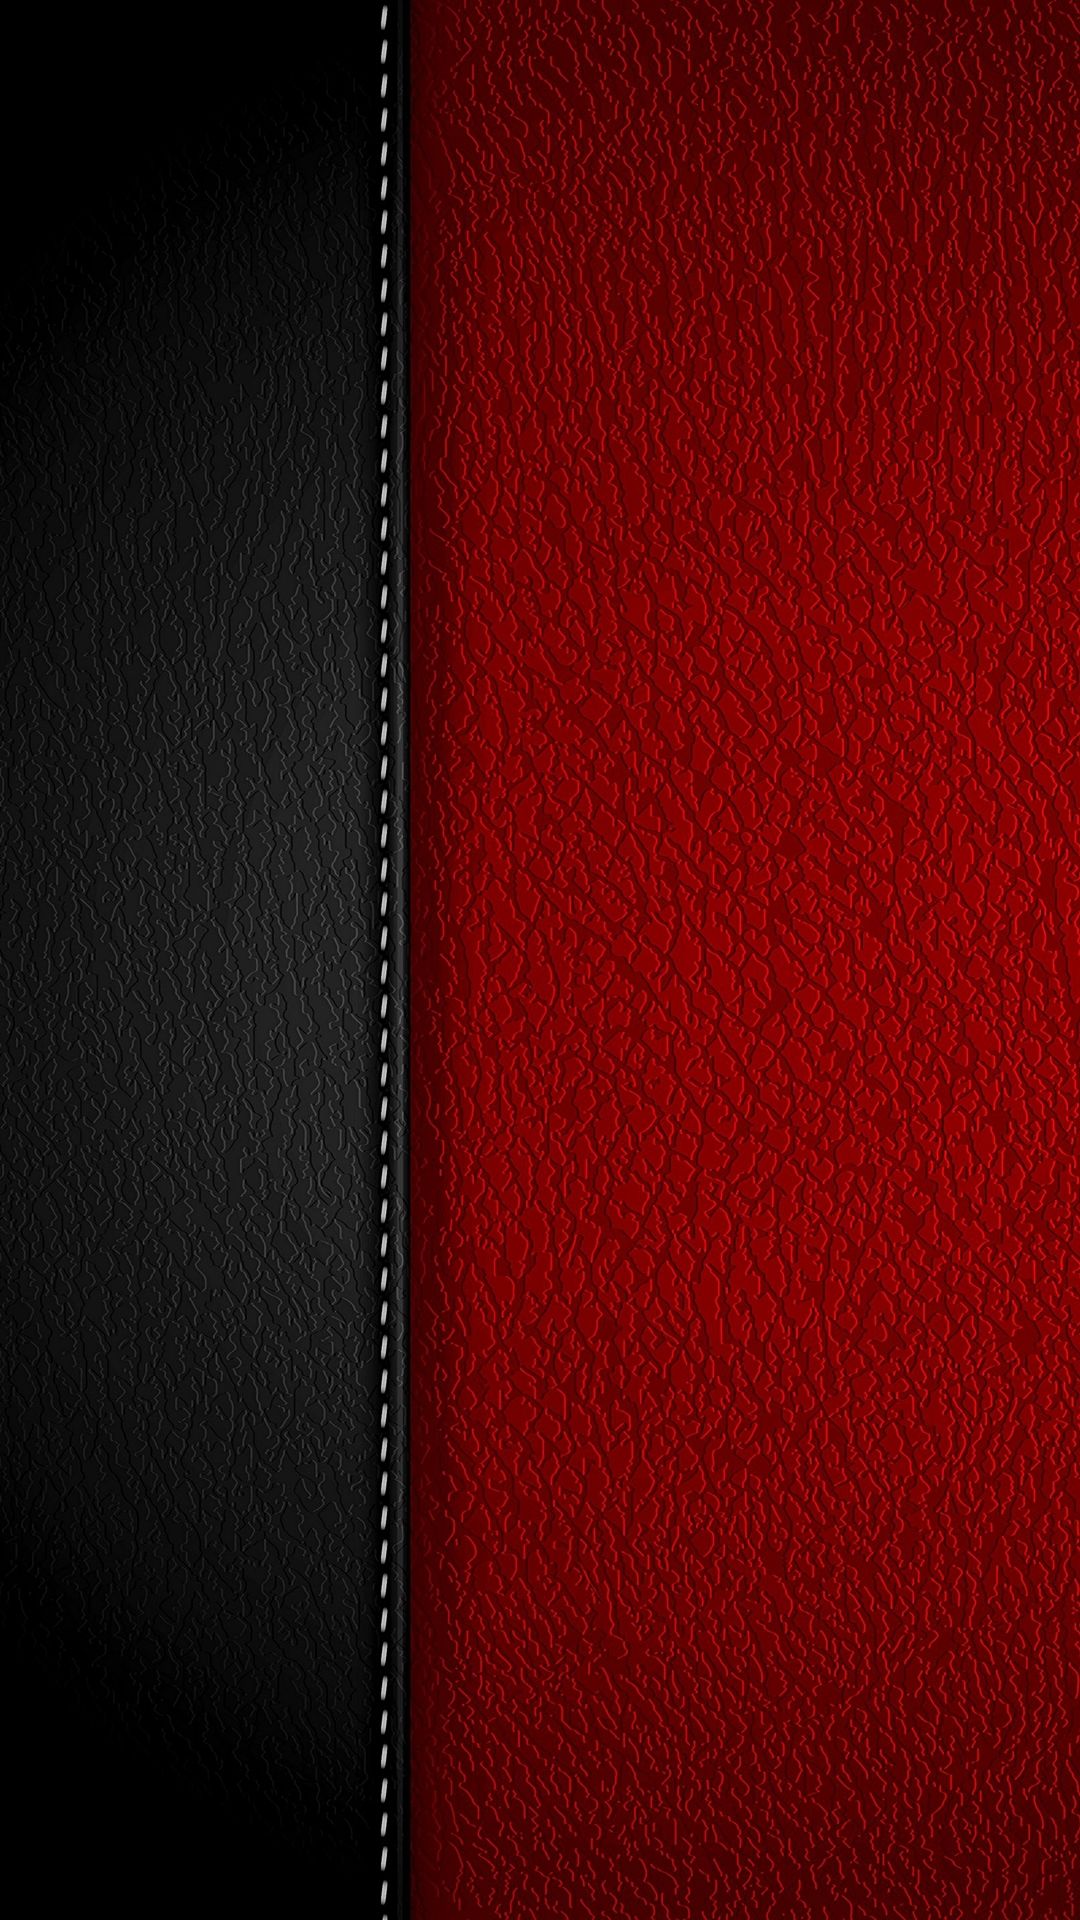 Leather Wallpaper Images  Free Download on Freepik